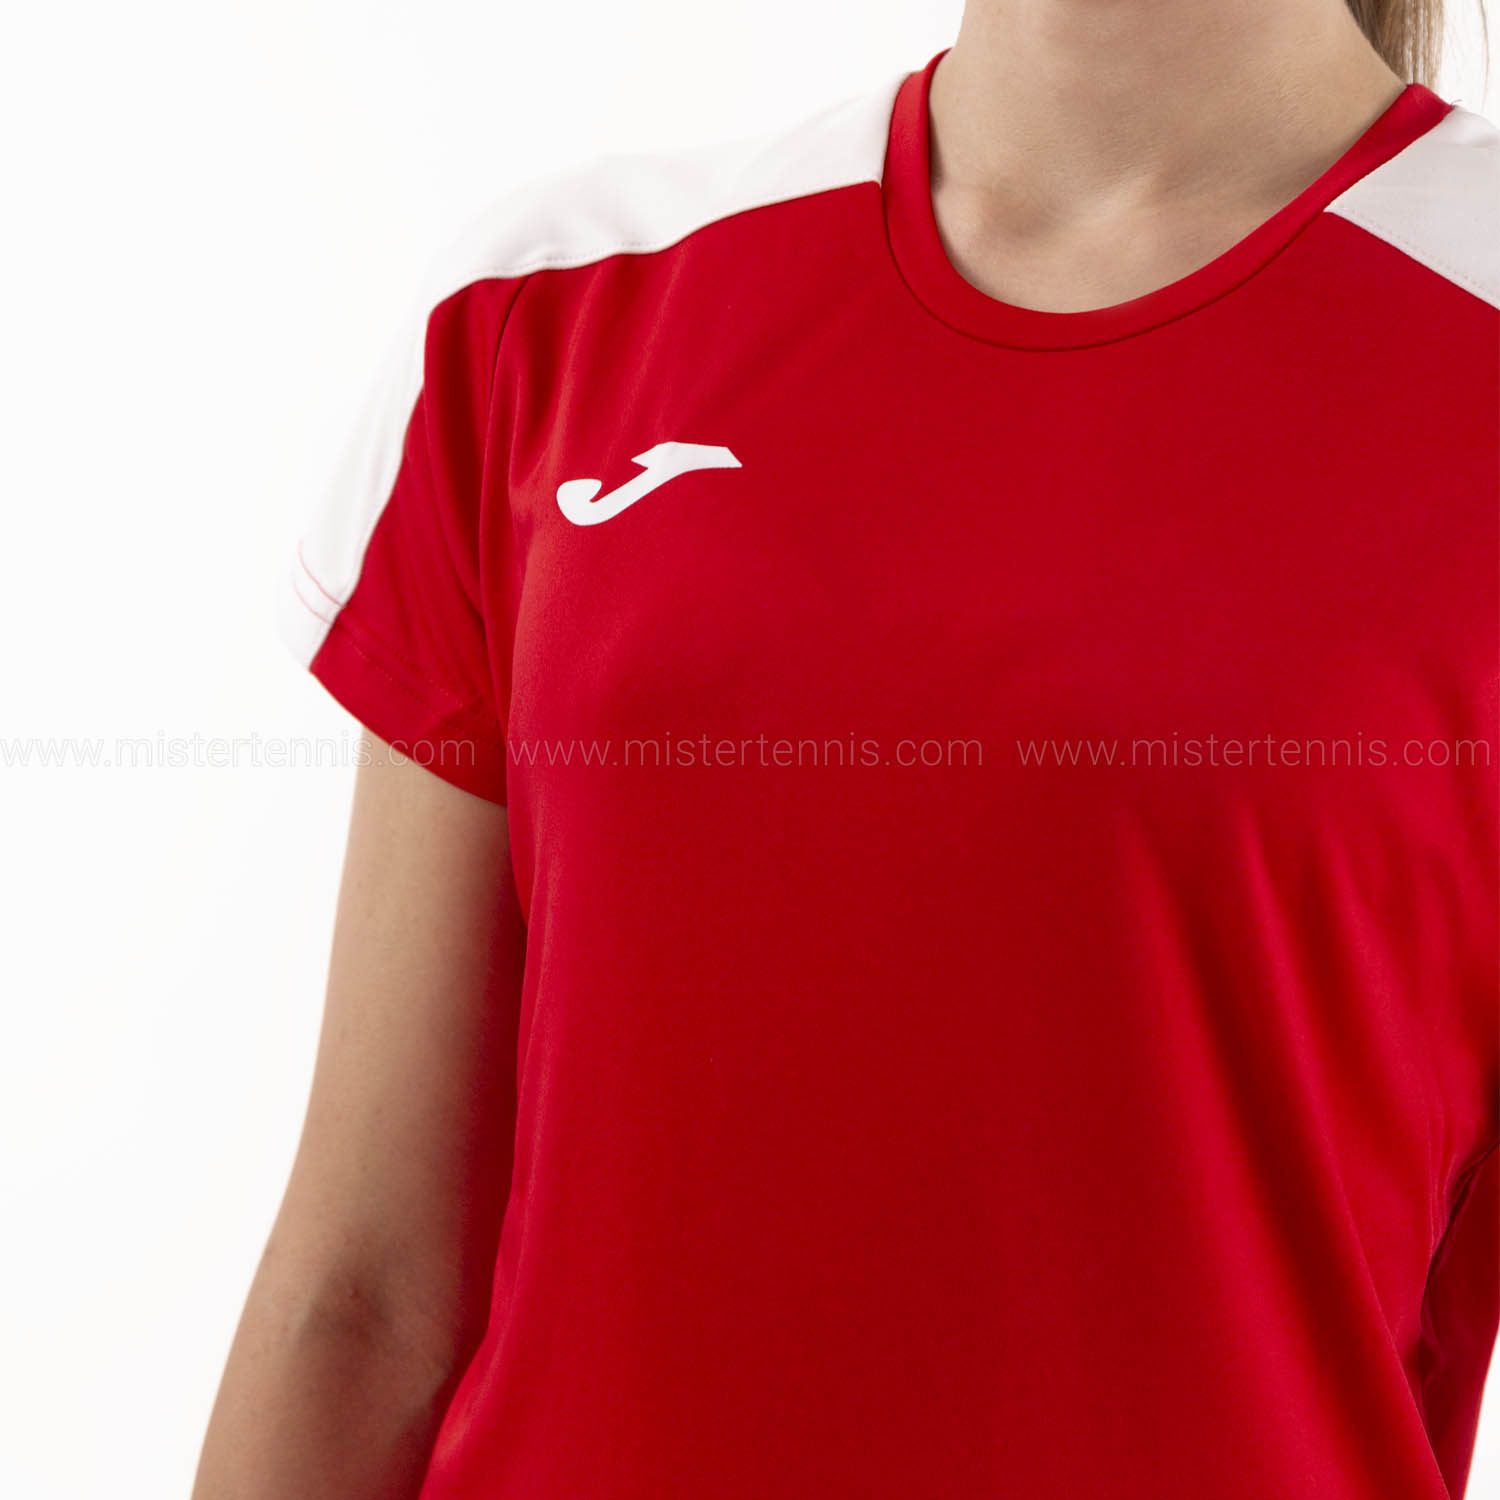 Joma Academy III T-Shirt - Red/White